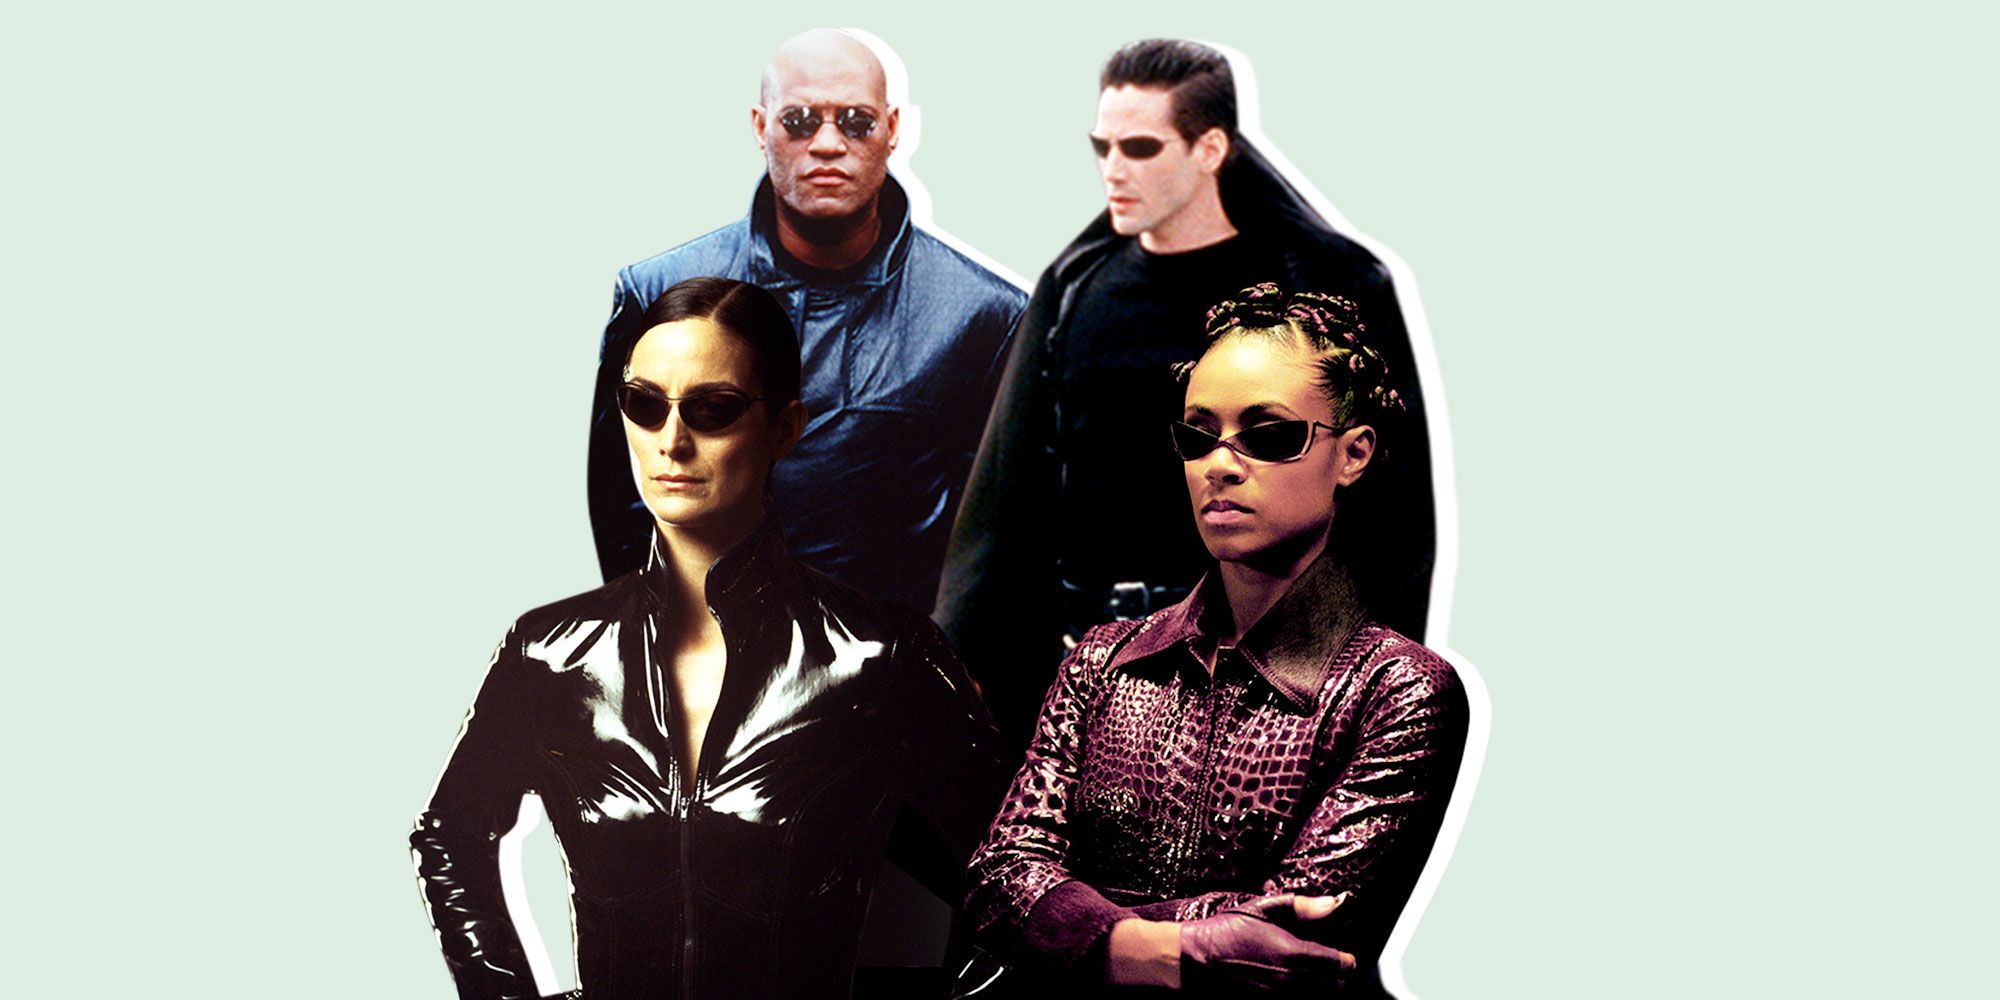 Let's Talk About The Matrix Resurrections' Cool Glasses | Carrie anne moss,  Cool glasses, Matrix film